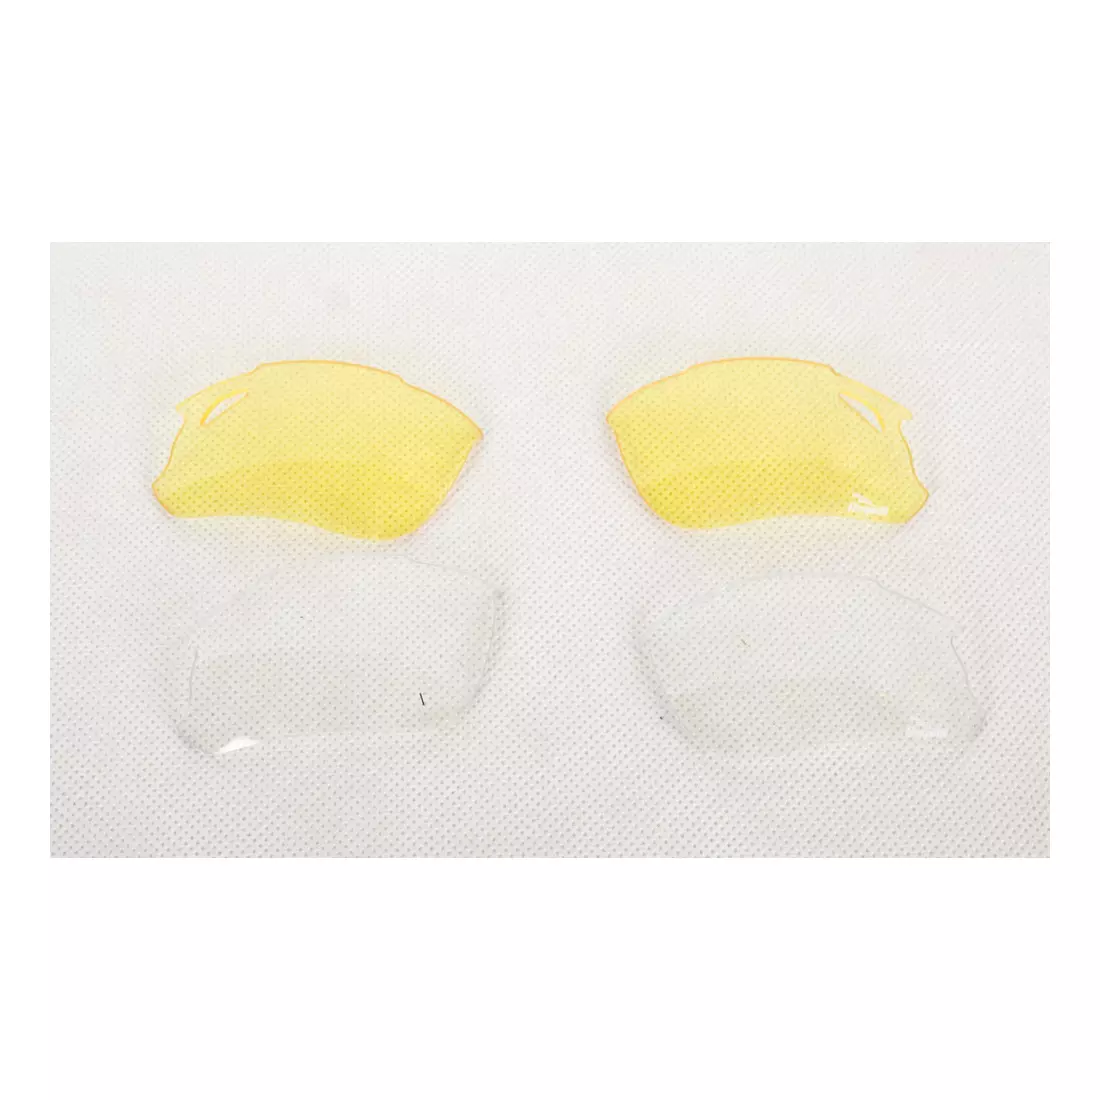 ROGELLI SS18 BIKE brýle PHANTOM fluor